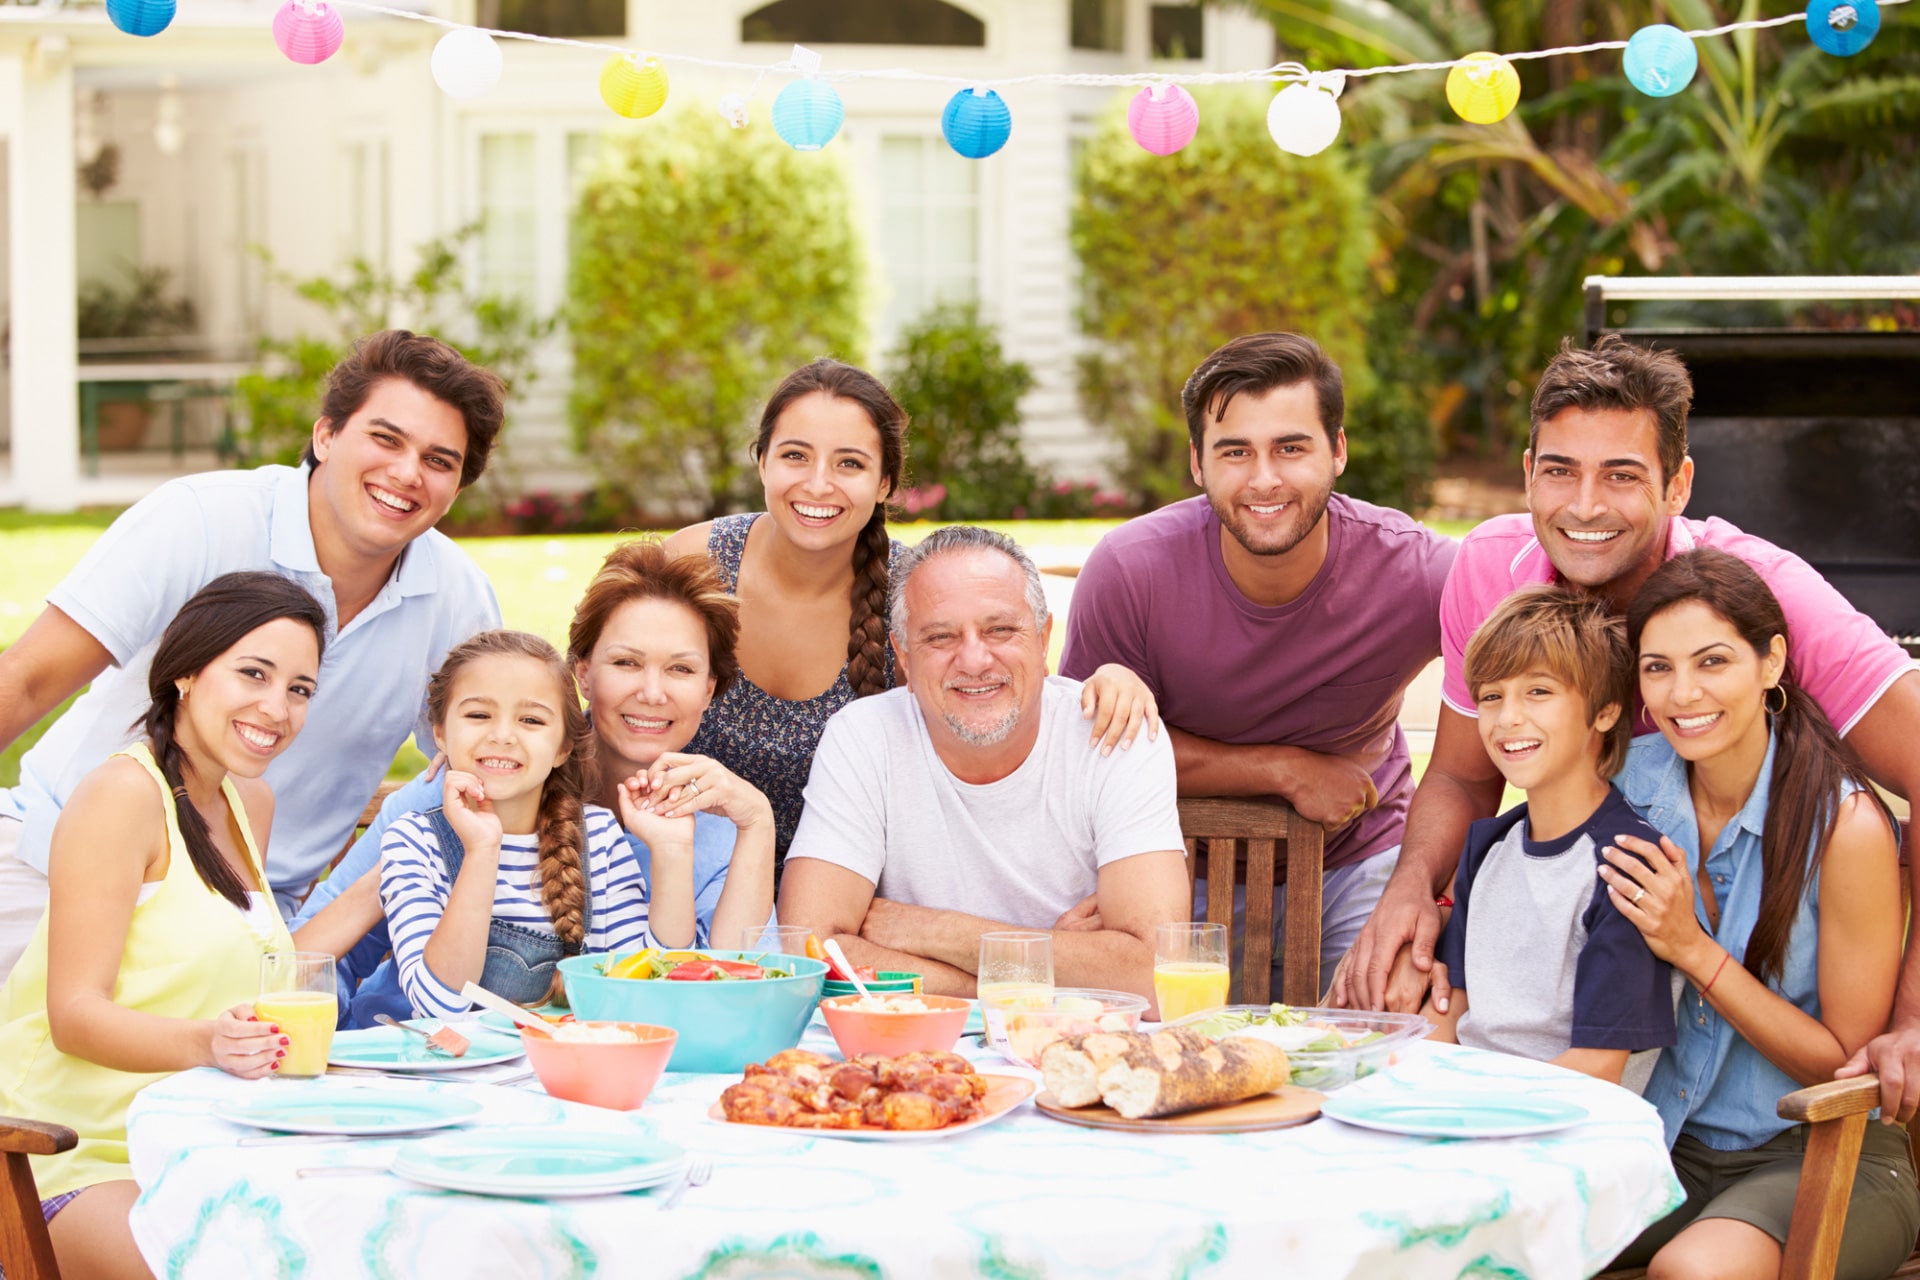 Serving Multigenerational Families